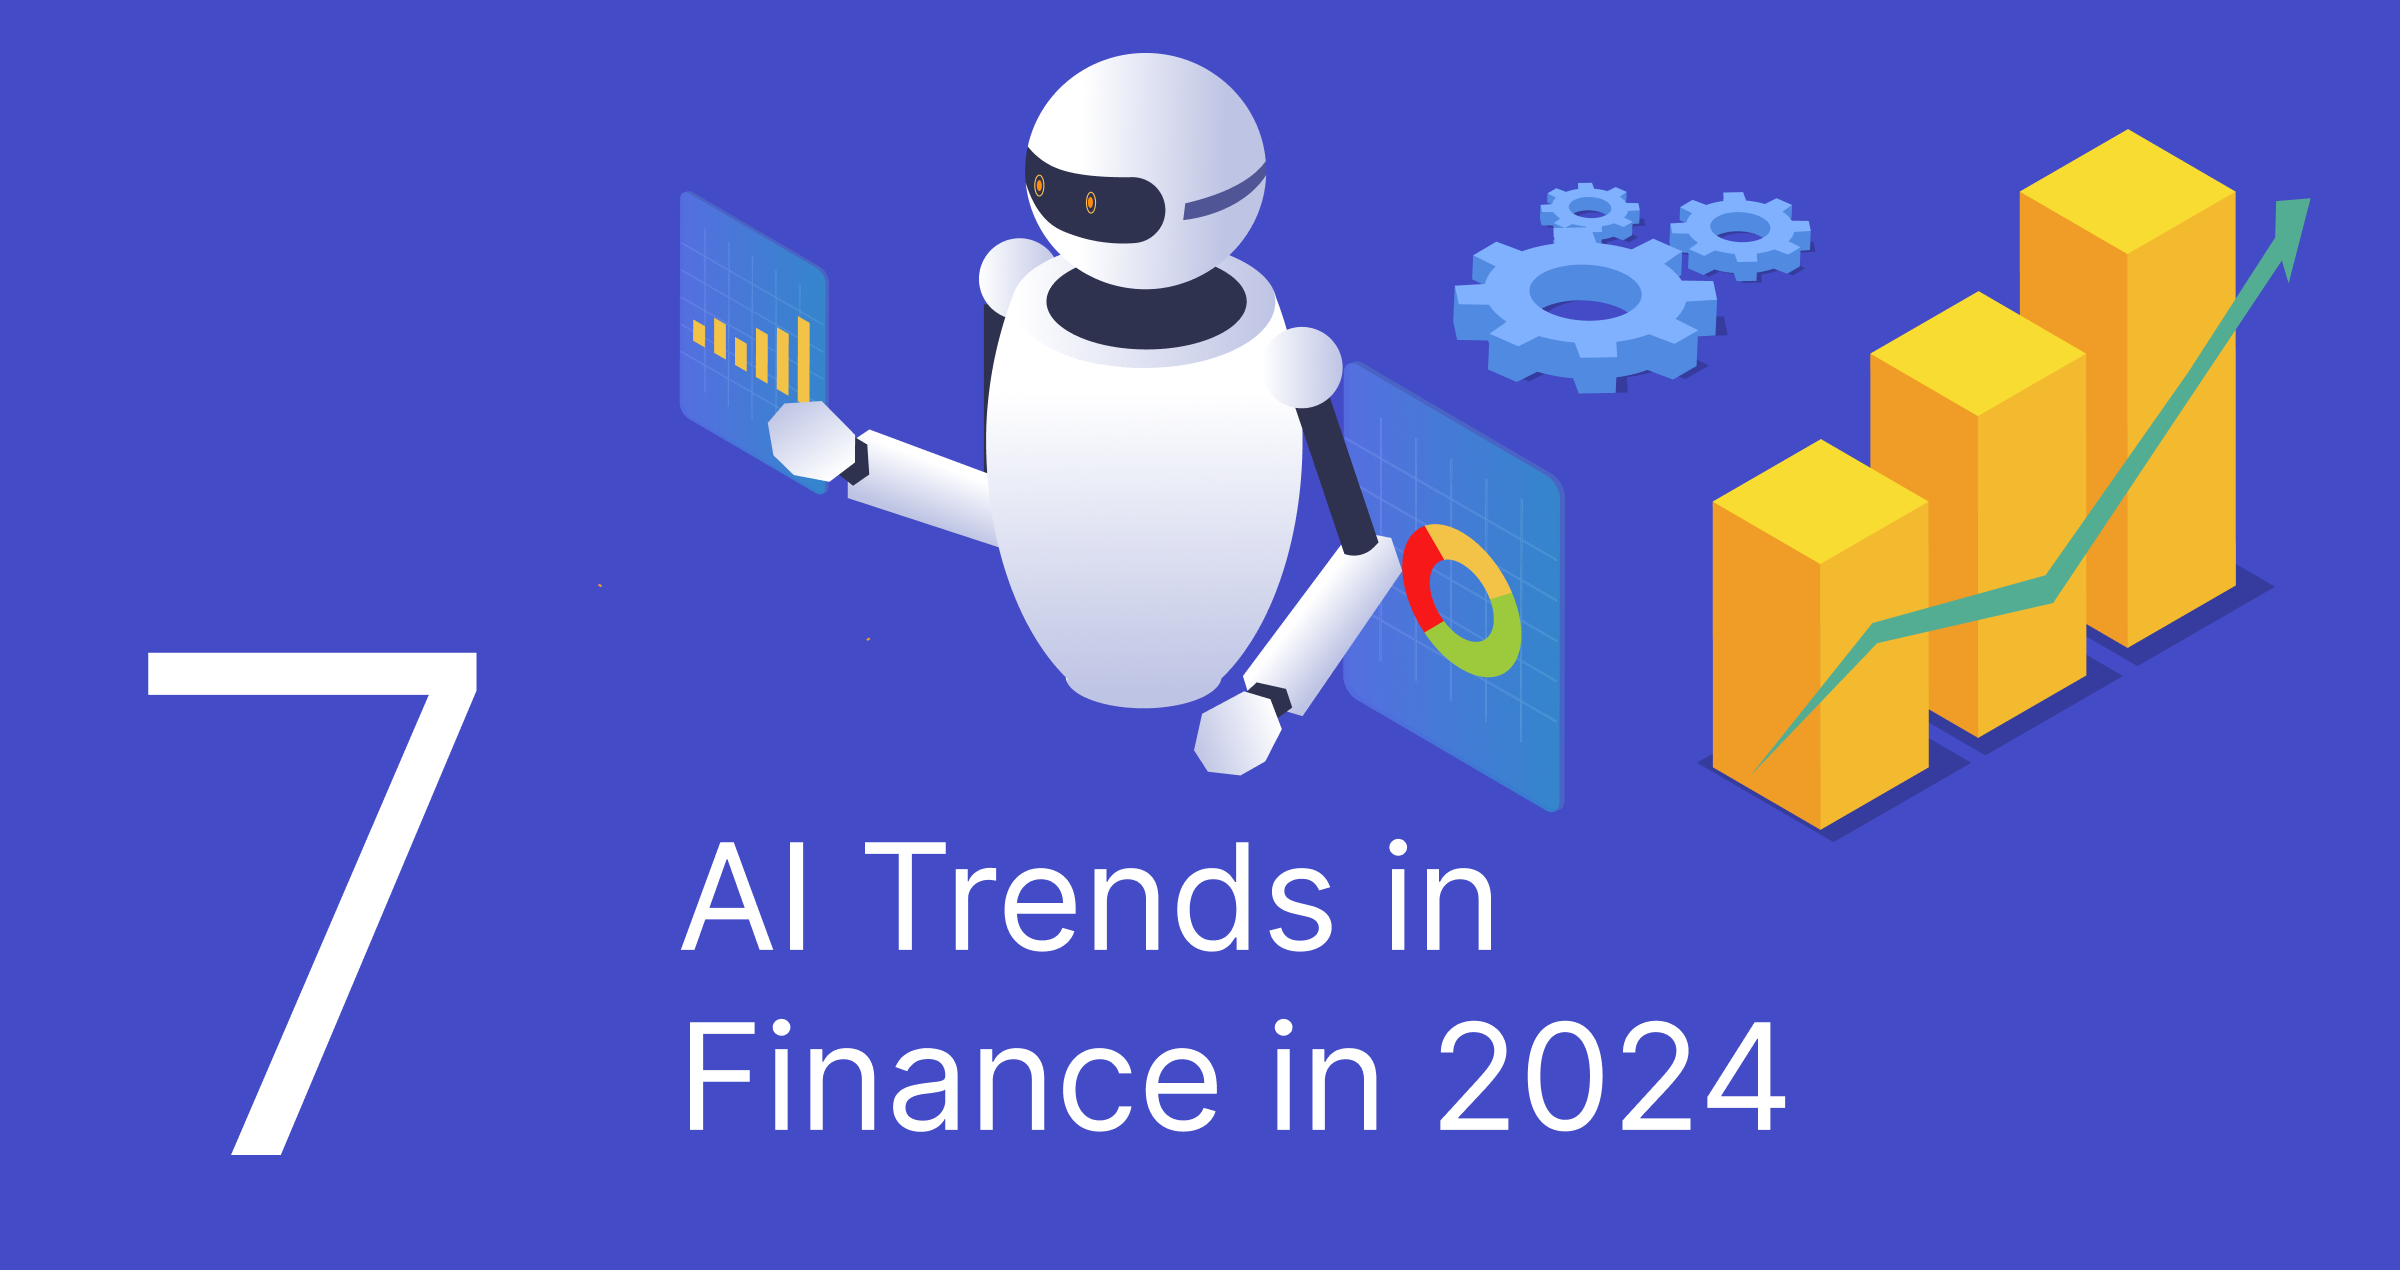 7 AI Trends in Finance in 2024